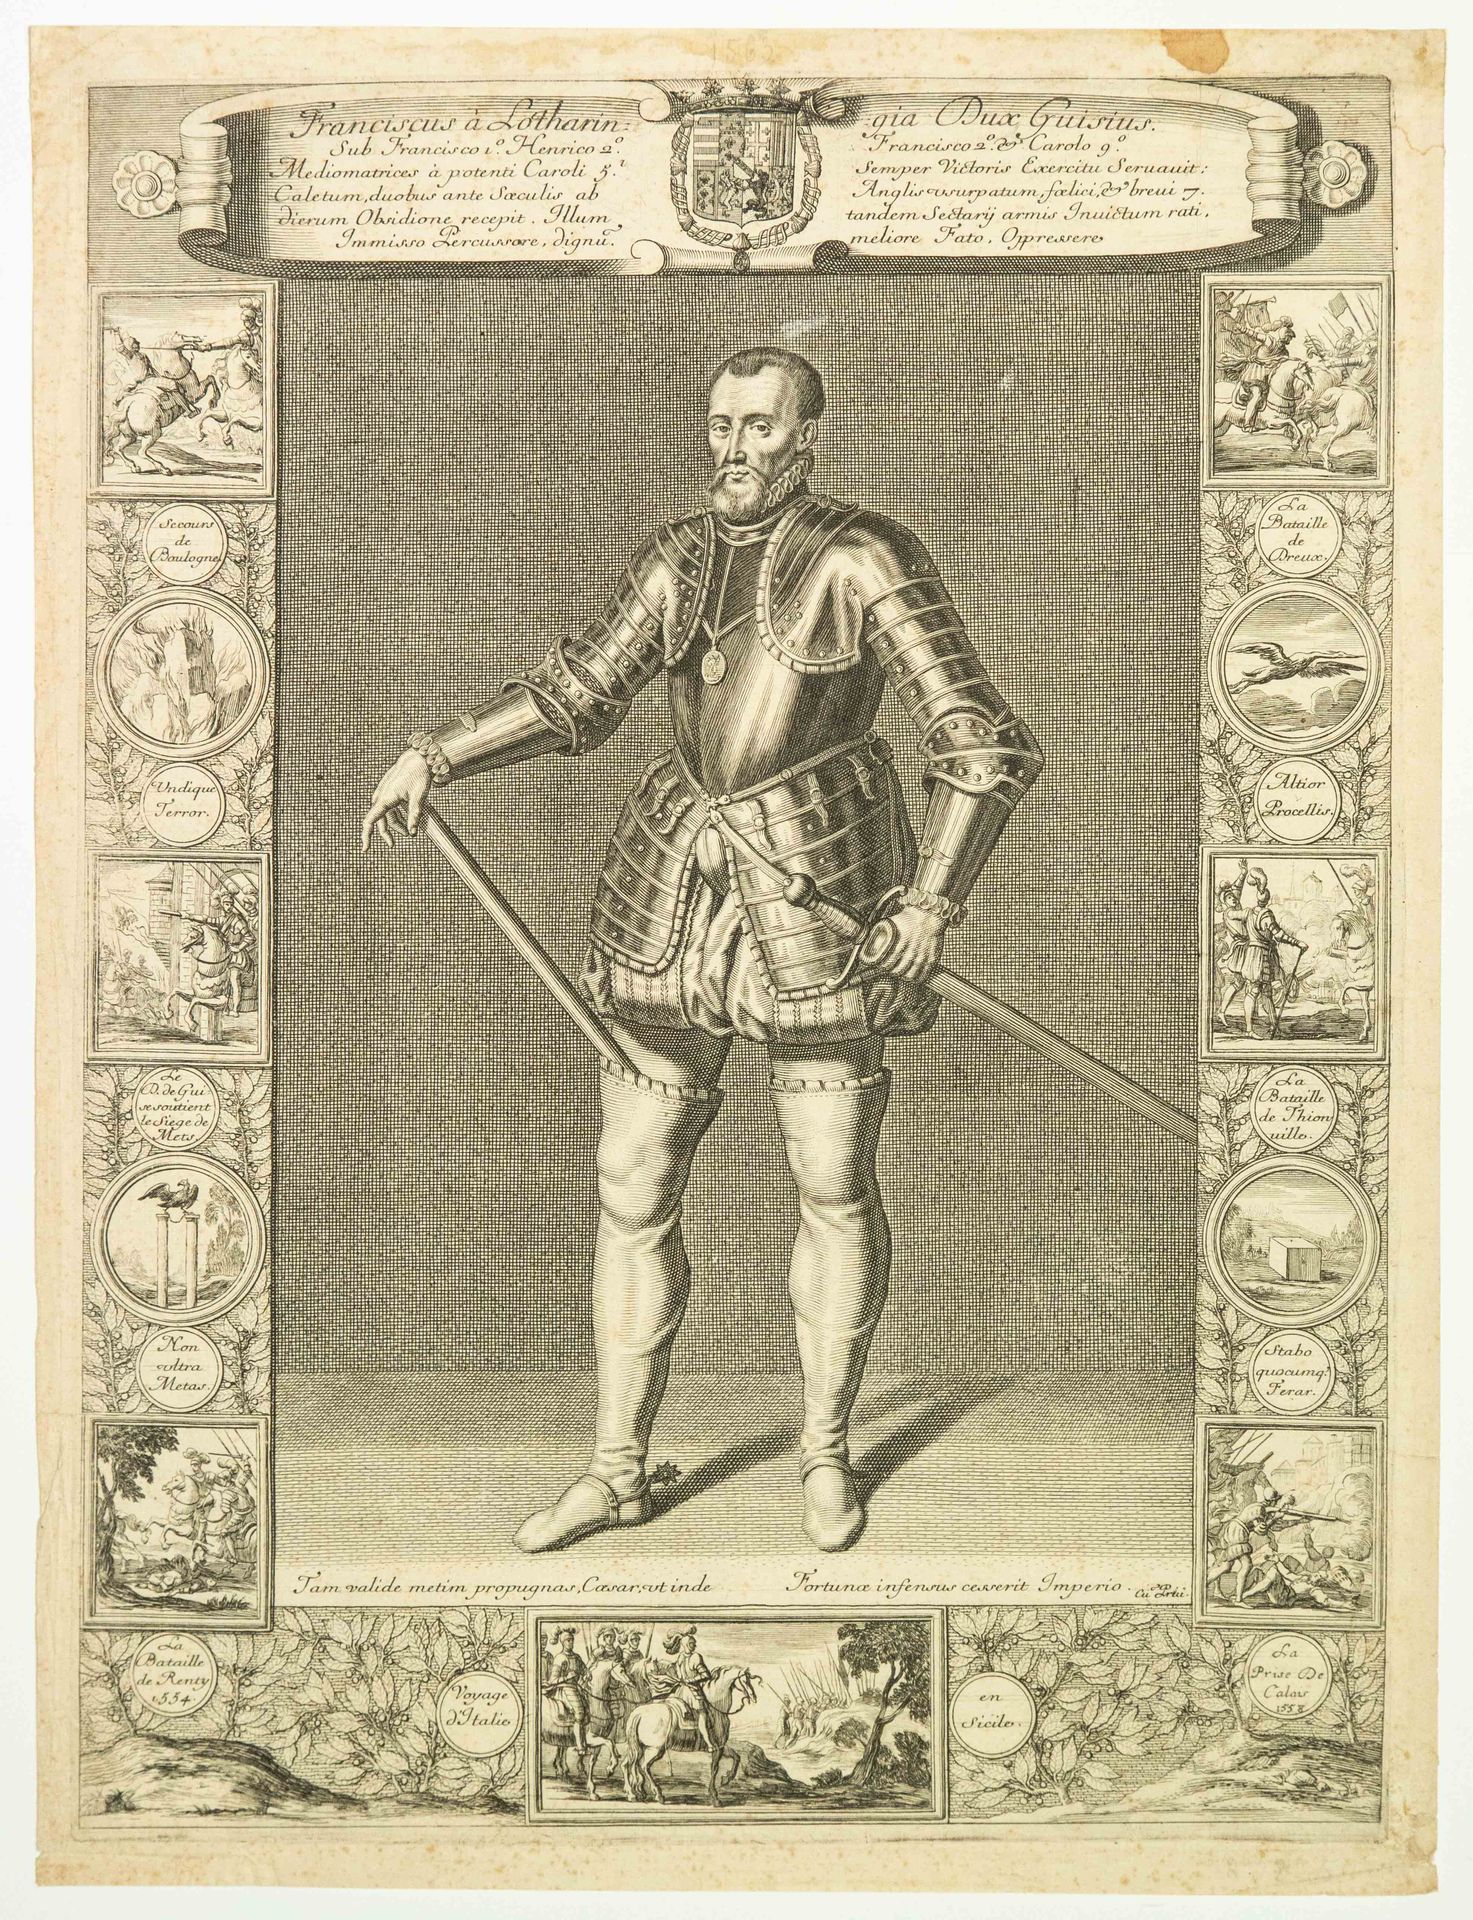 Null "弗朗索瓦-德-洛朗，吉斯公爵"。17世纪的雕刻作品（约1650年），描绘了吉斯第二公爵弗朗索瓦一世（1519-1563年）的全貌和穿着盔甲。